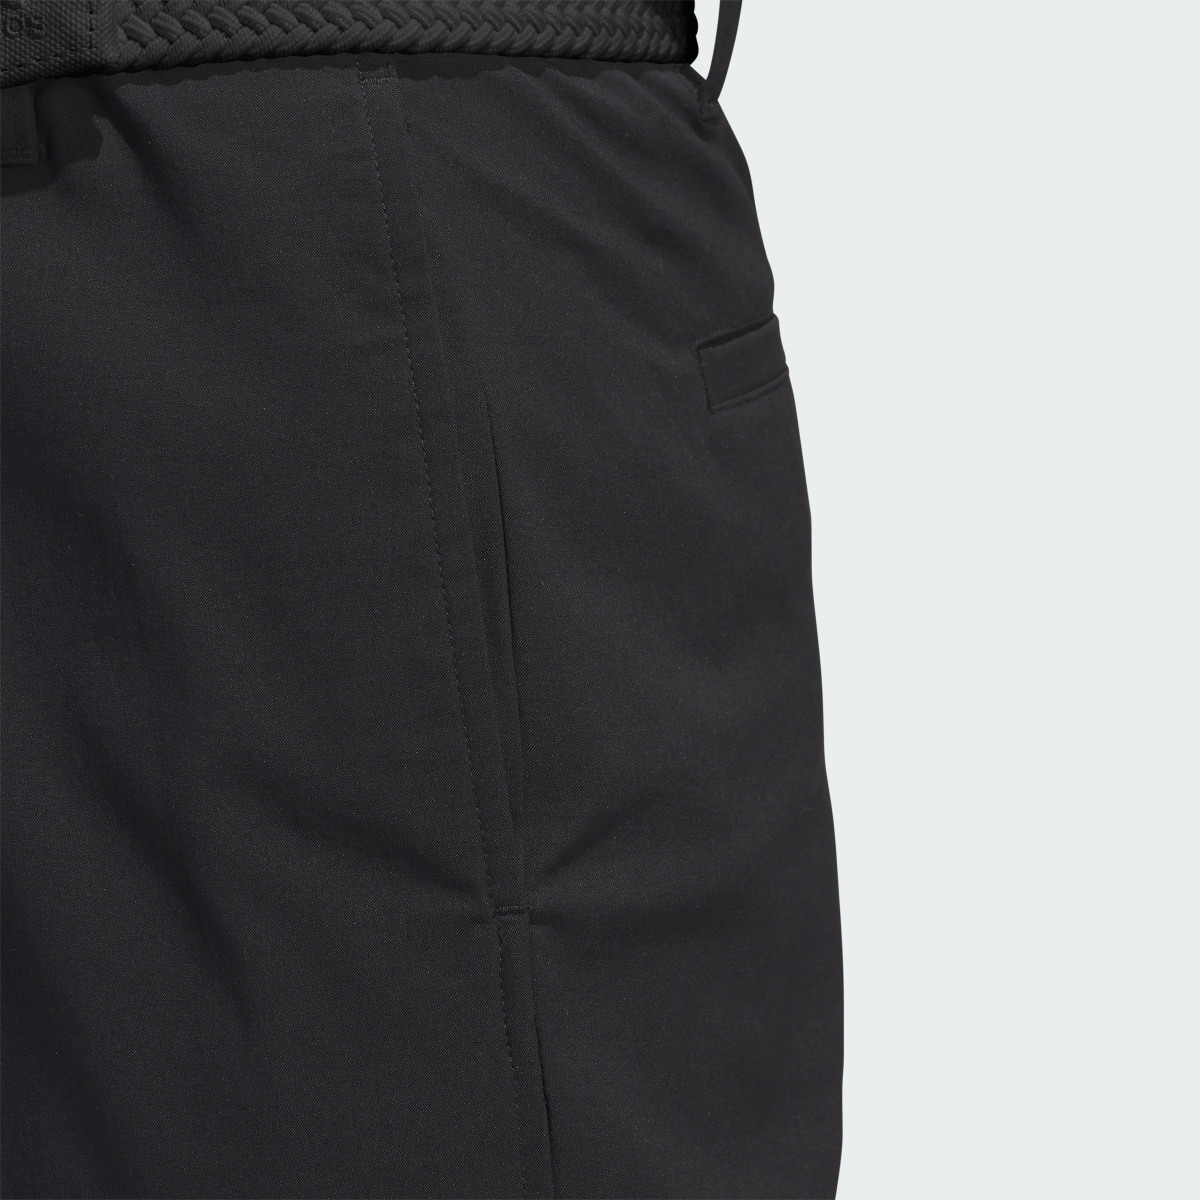 Adidas Pantalon Chino Ultimate365. 6